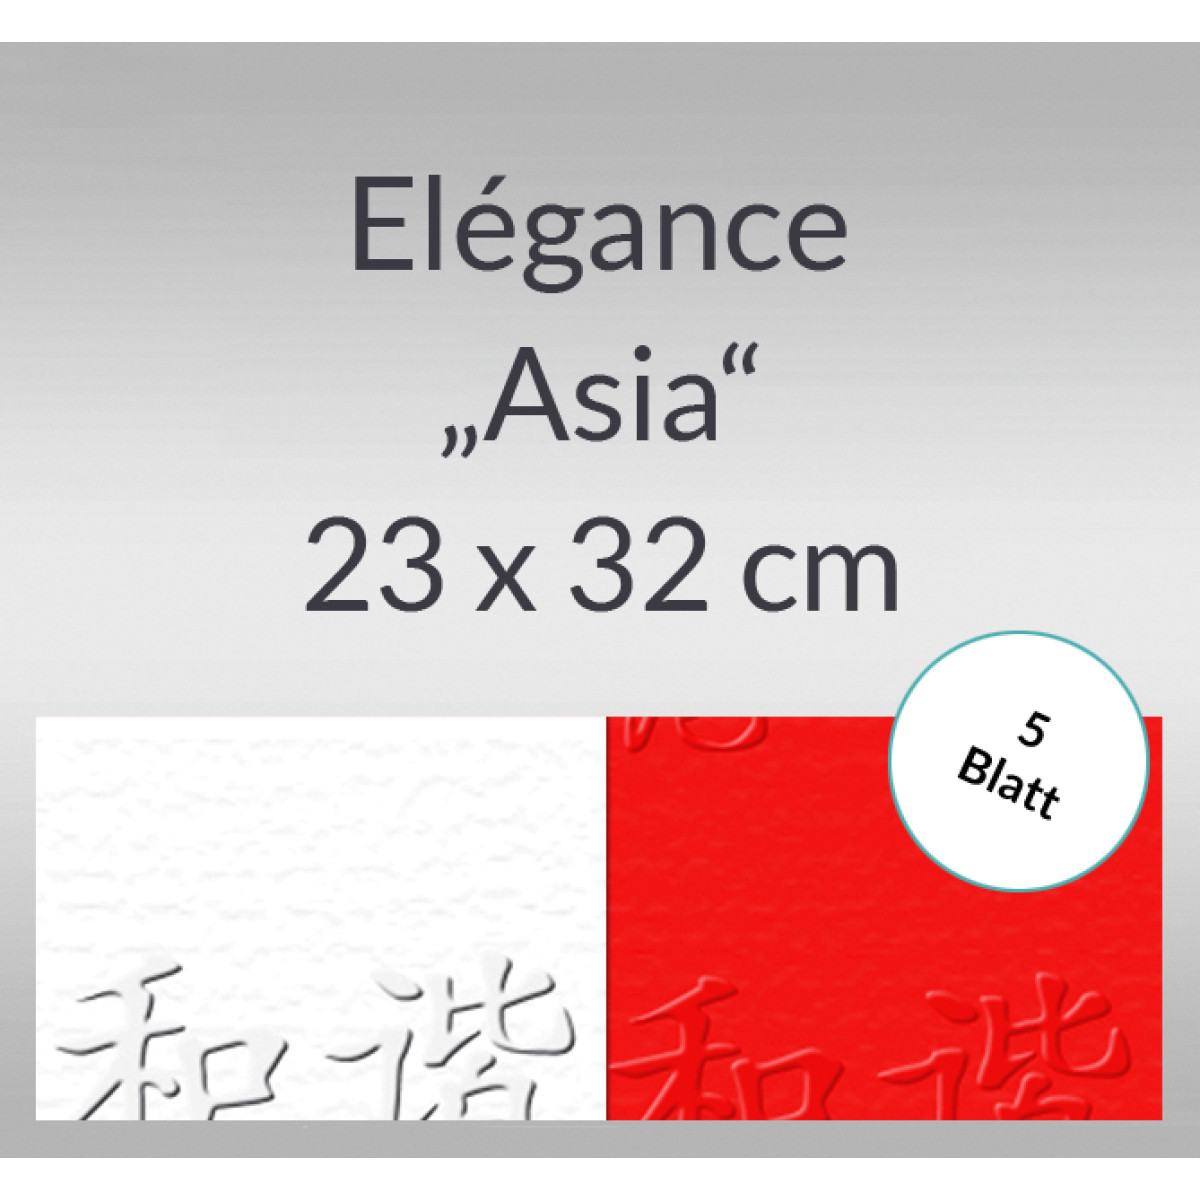 Elegance "Asia" 220 g/qm 23 x 32 cm - 5 Blatt